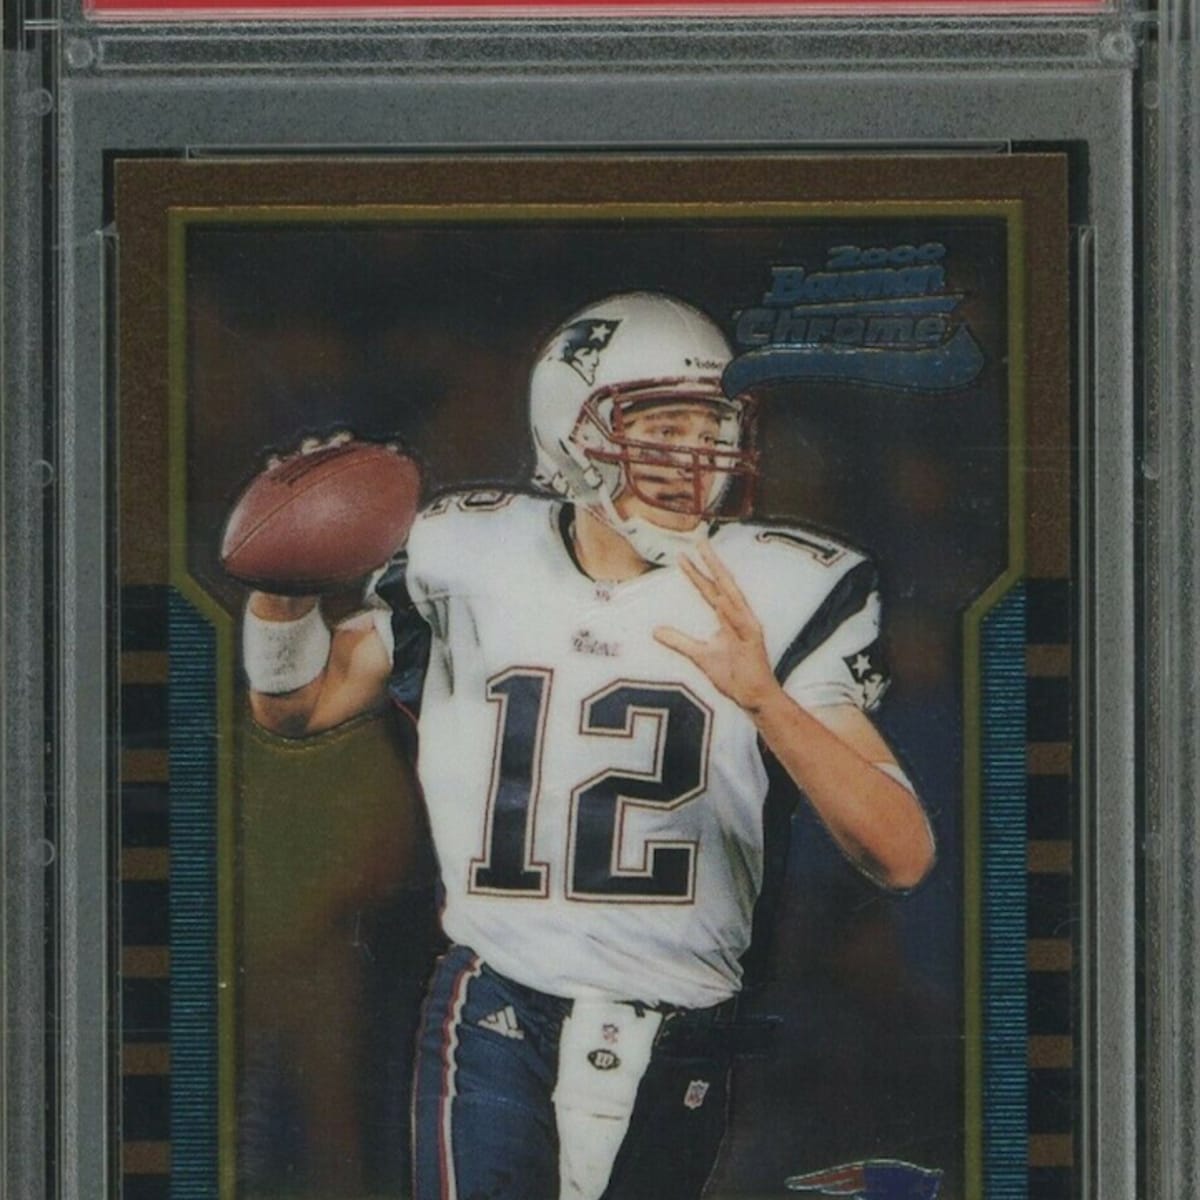 2000 Upper Deck Tom Brady rookie card